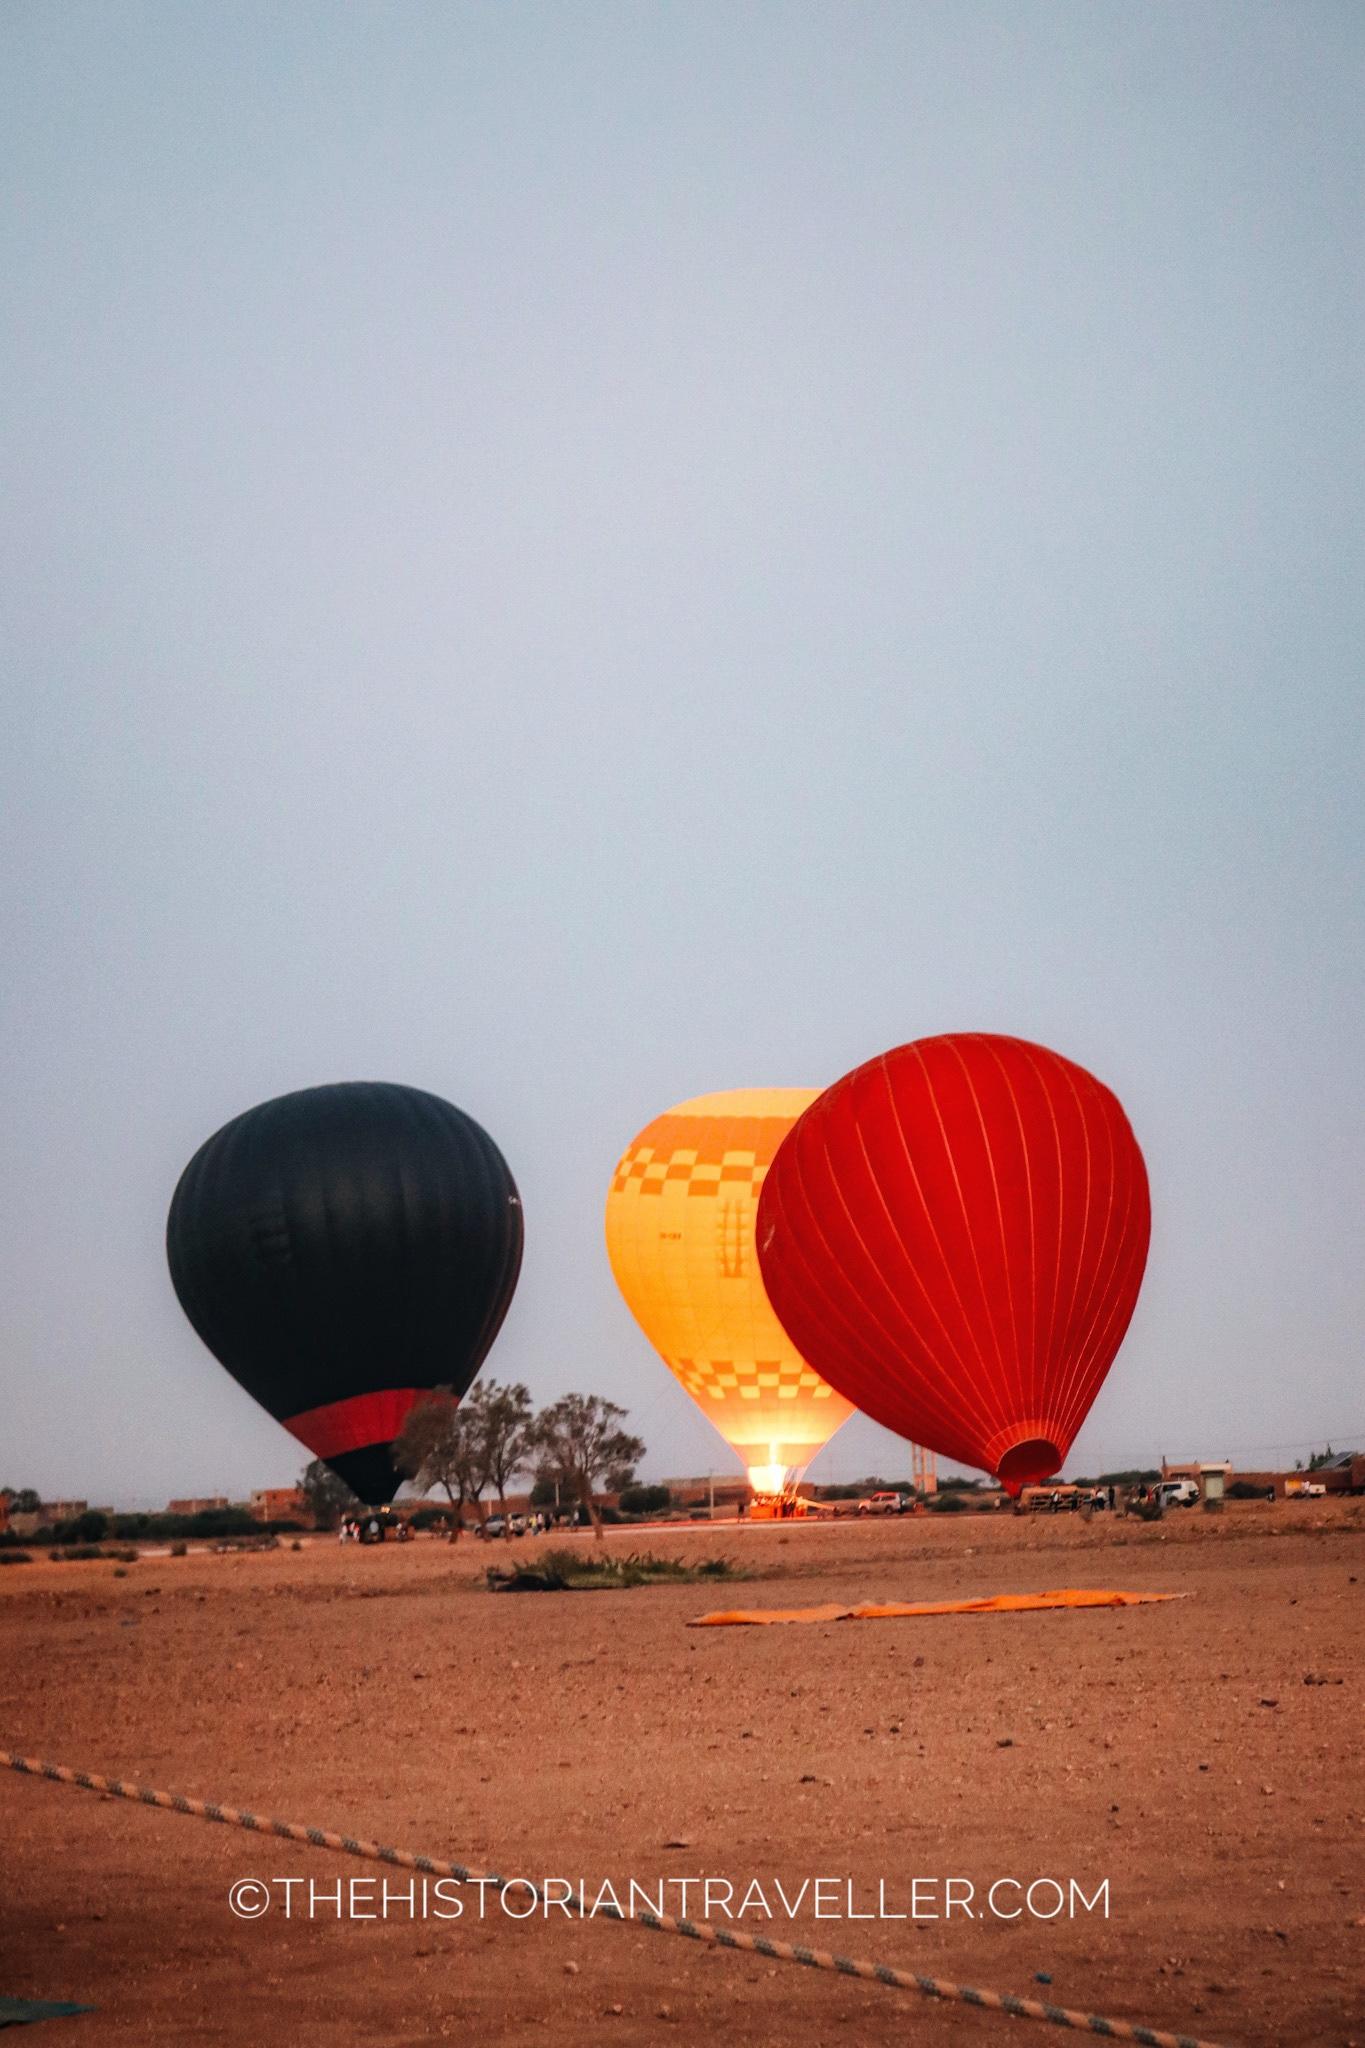 Hot air balloon in Marrakech - 3 hot air balloons grounded